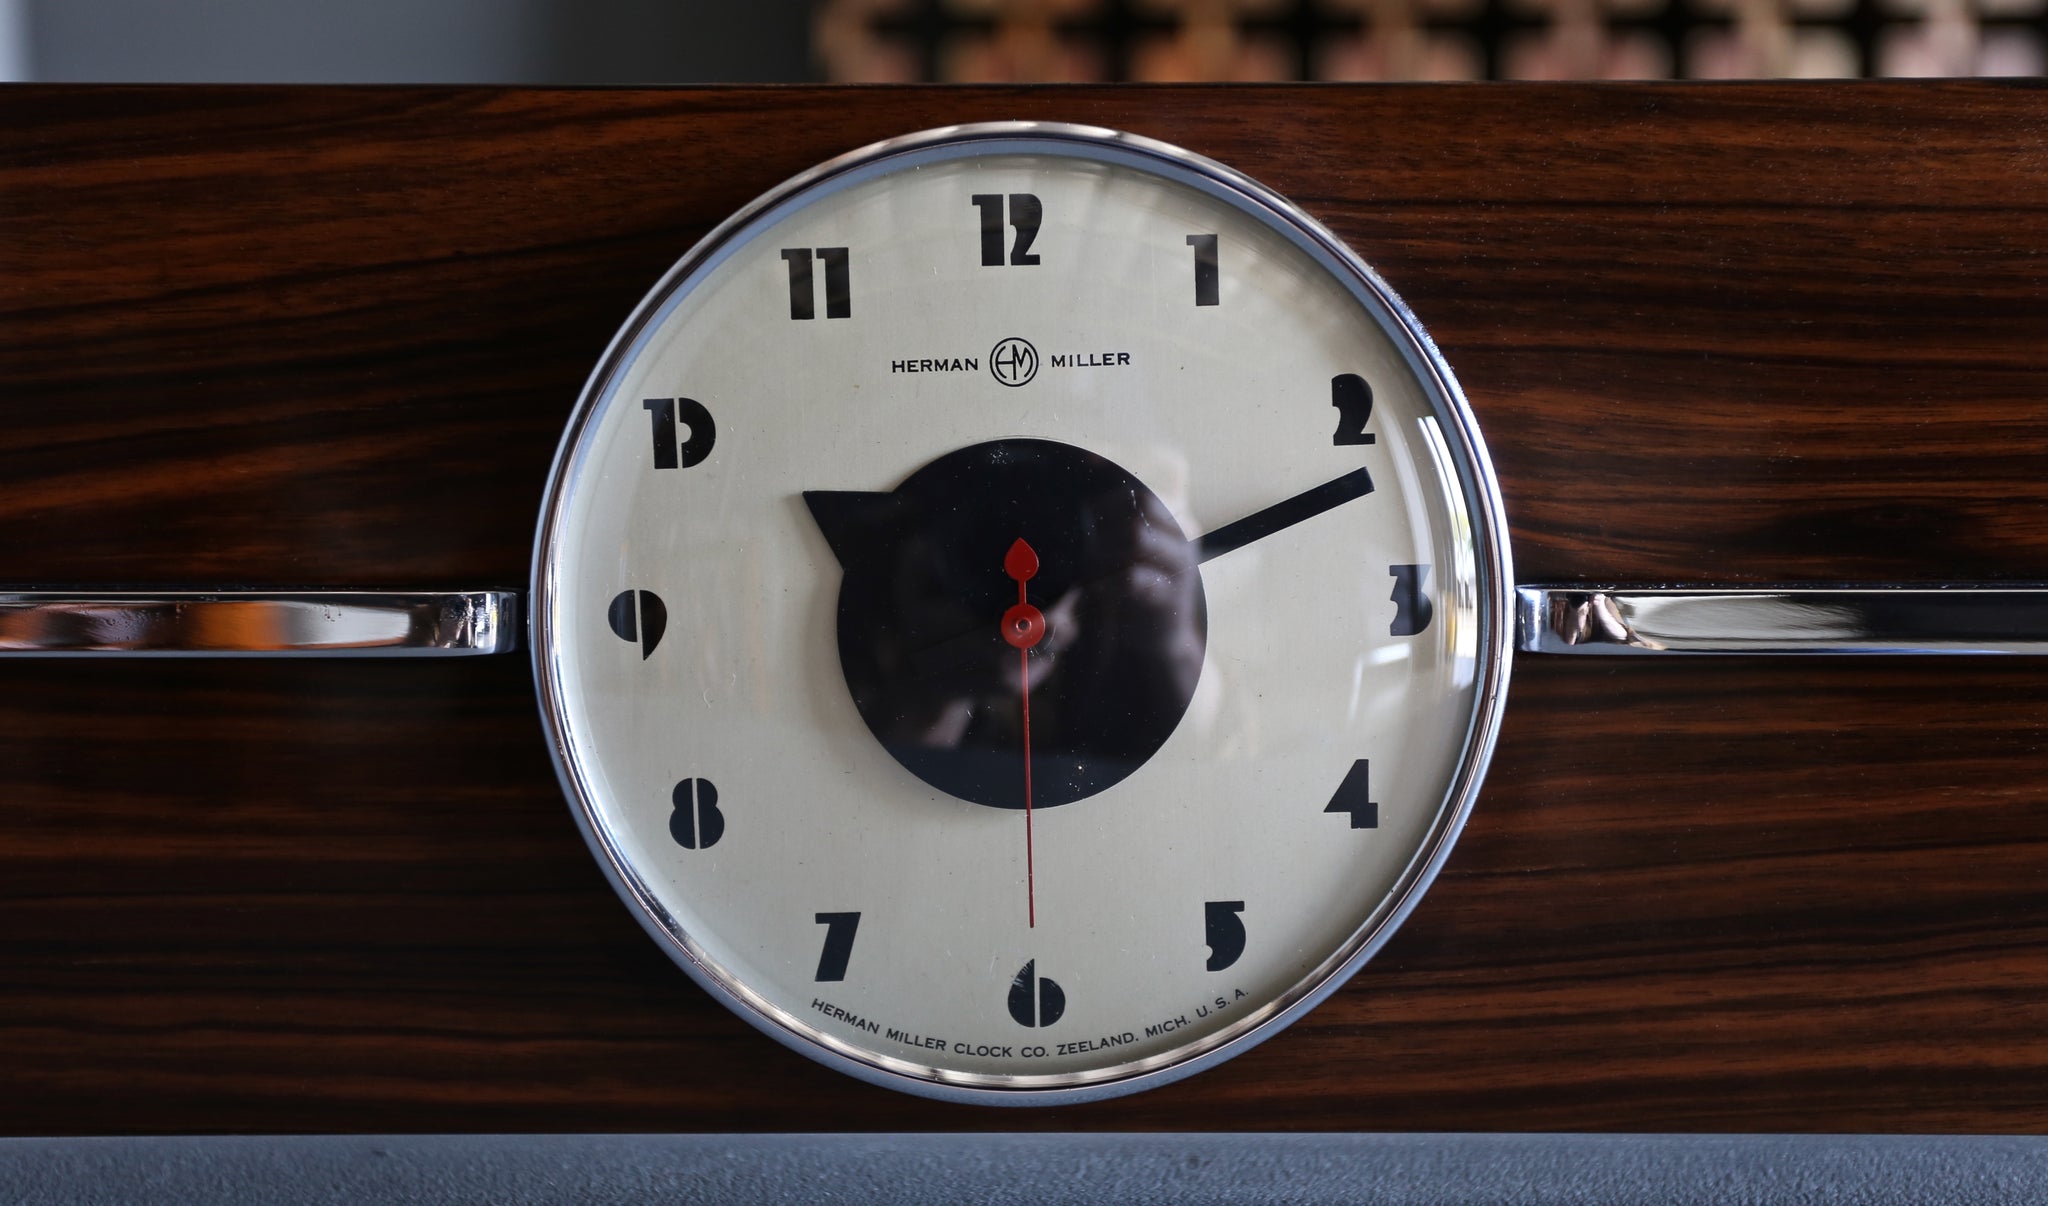 = SOLD = Gilbert Rohde Macassar Ebony Table Clock, No. 6366 for Herman Miller, circa 1940